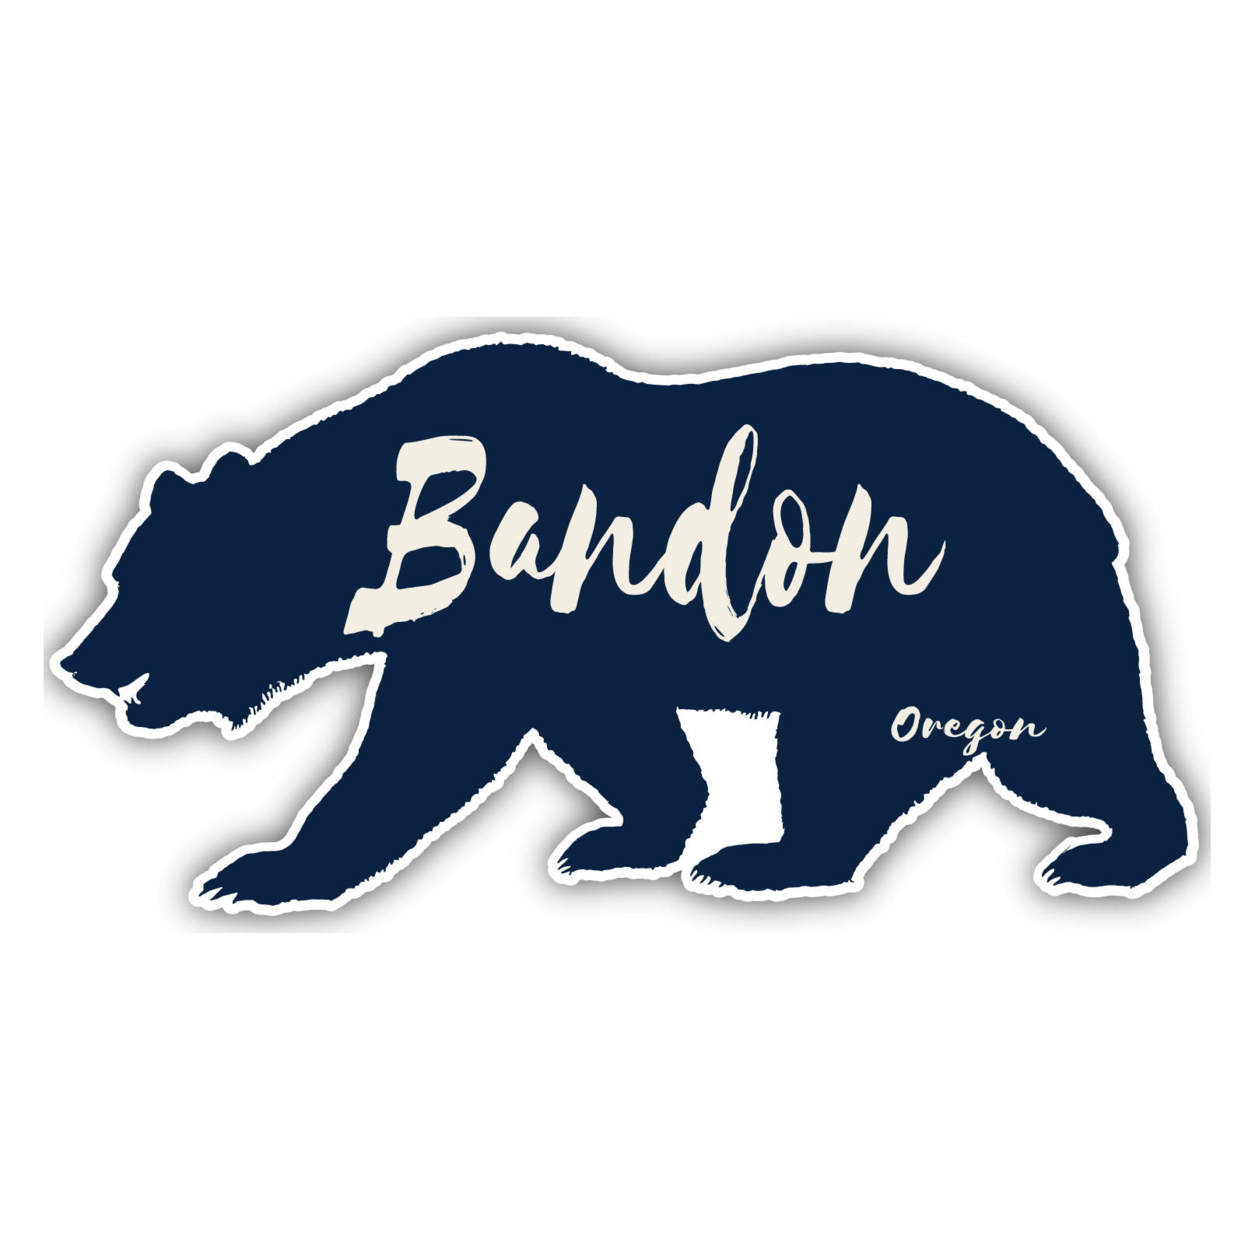 Bandon Oregon Souvenir Decorative Stickers (Choose Theme And Size) - 4-Pack, 8-Inch, Bear